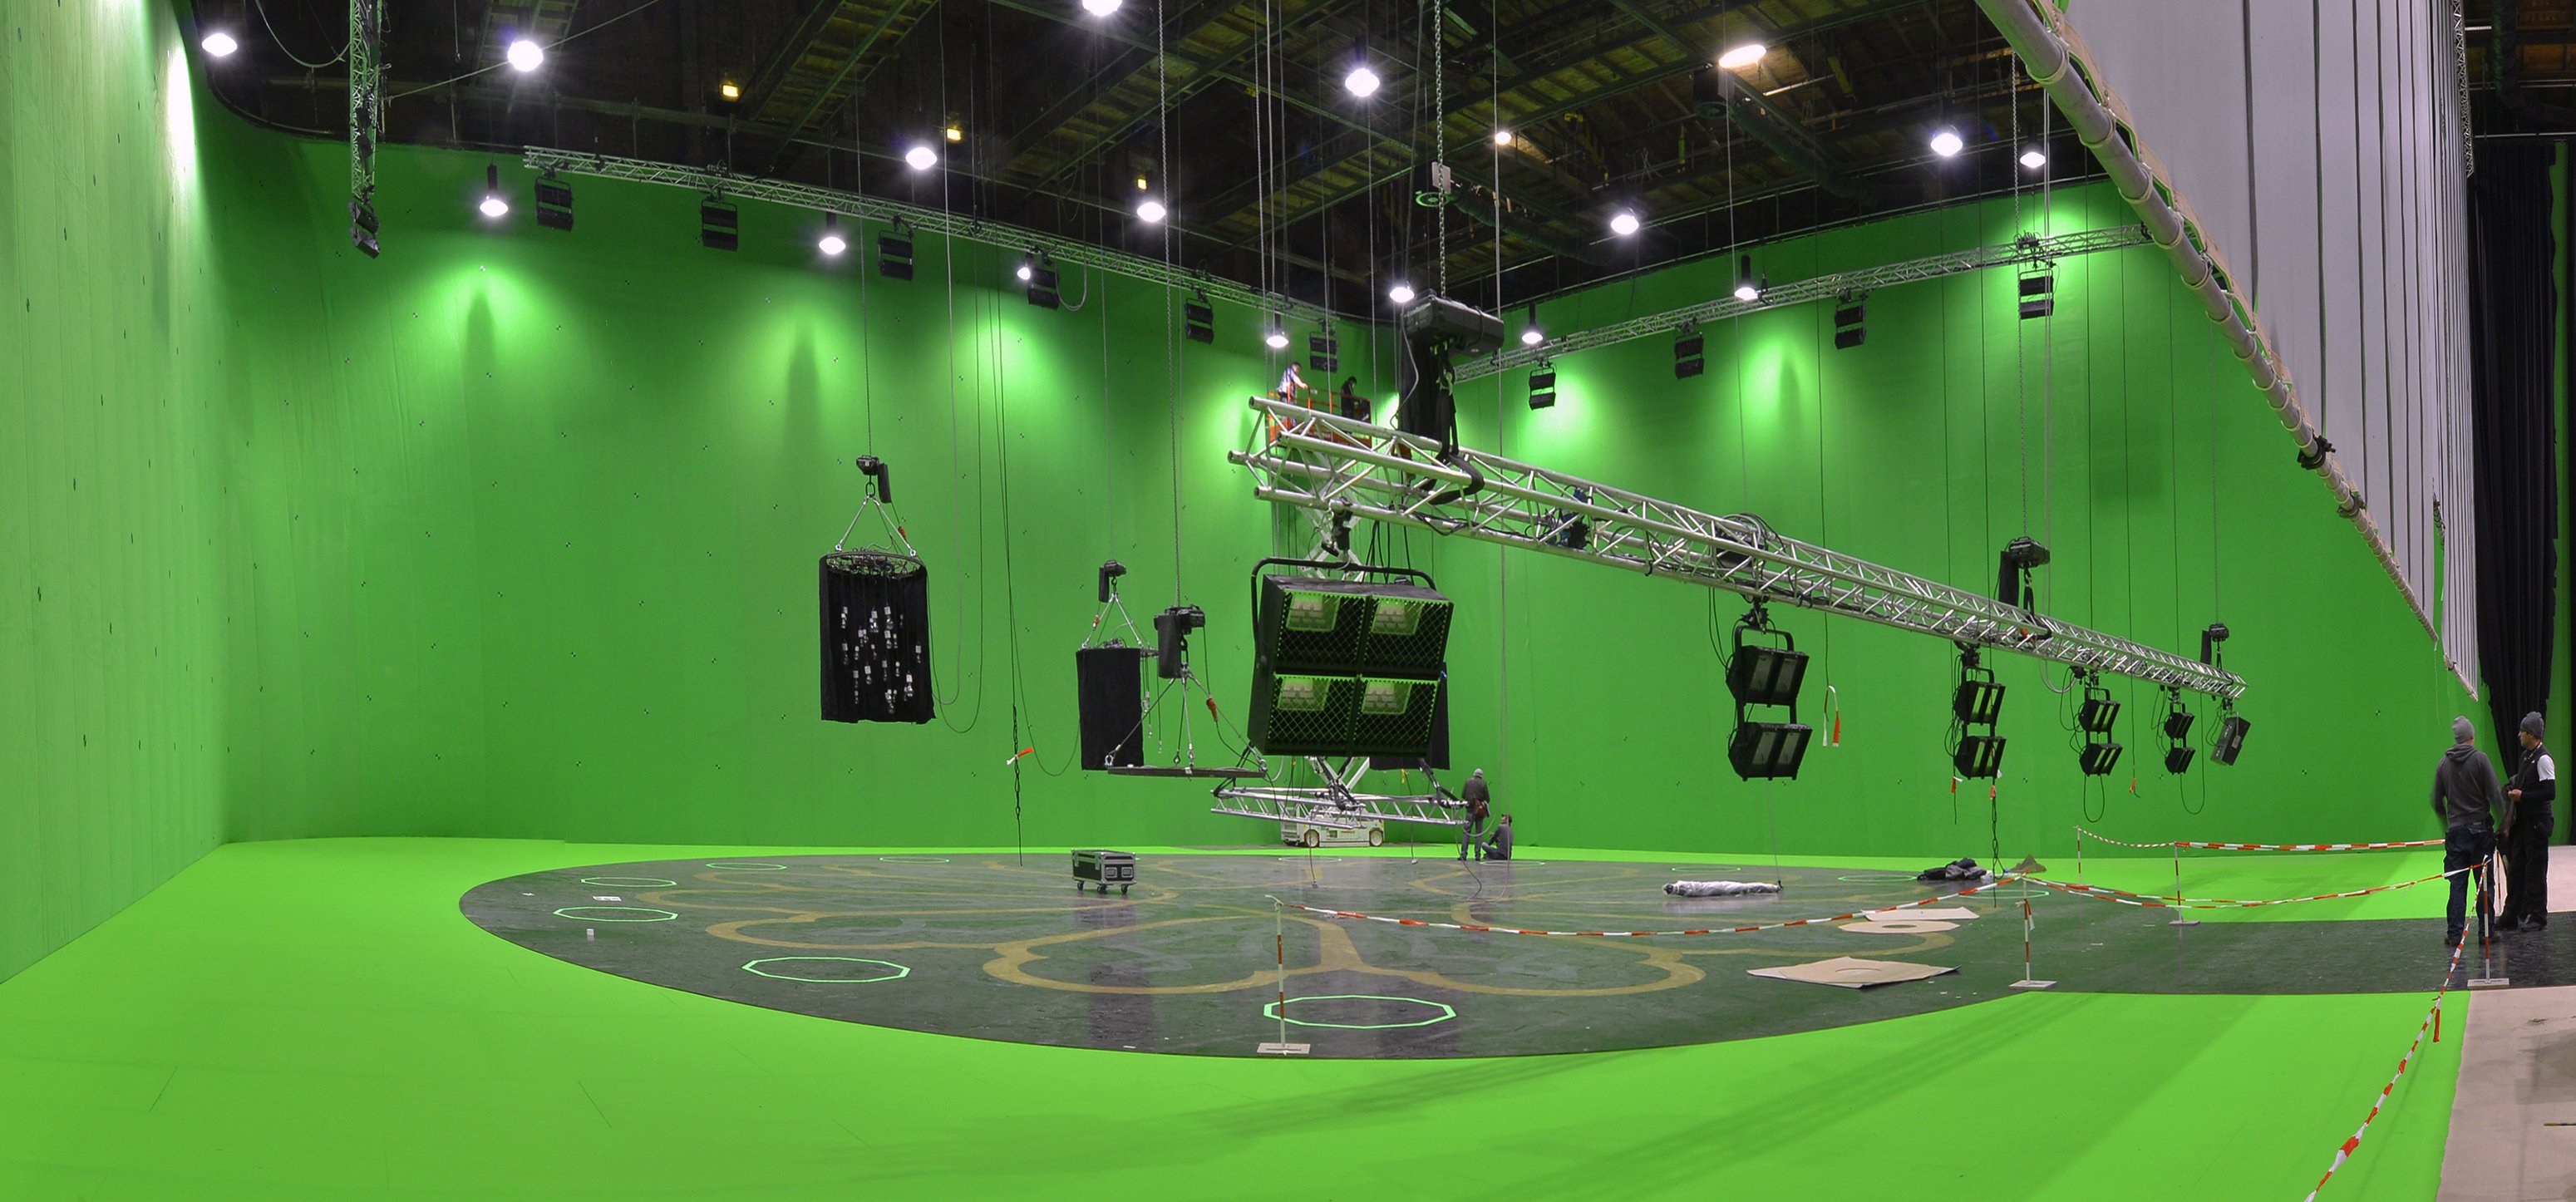 HAVEL STUDIOS - Film Studios & photo studios in Germany, Europe | Film Studios - Rated 4.2